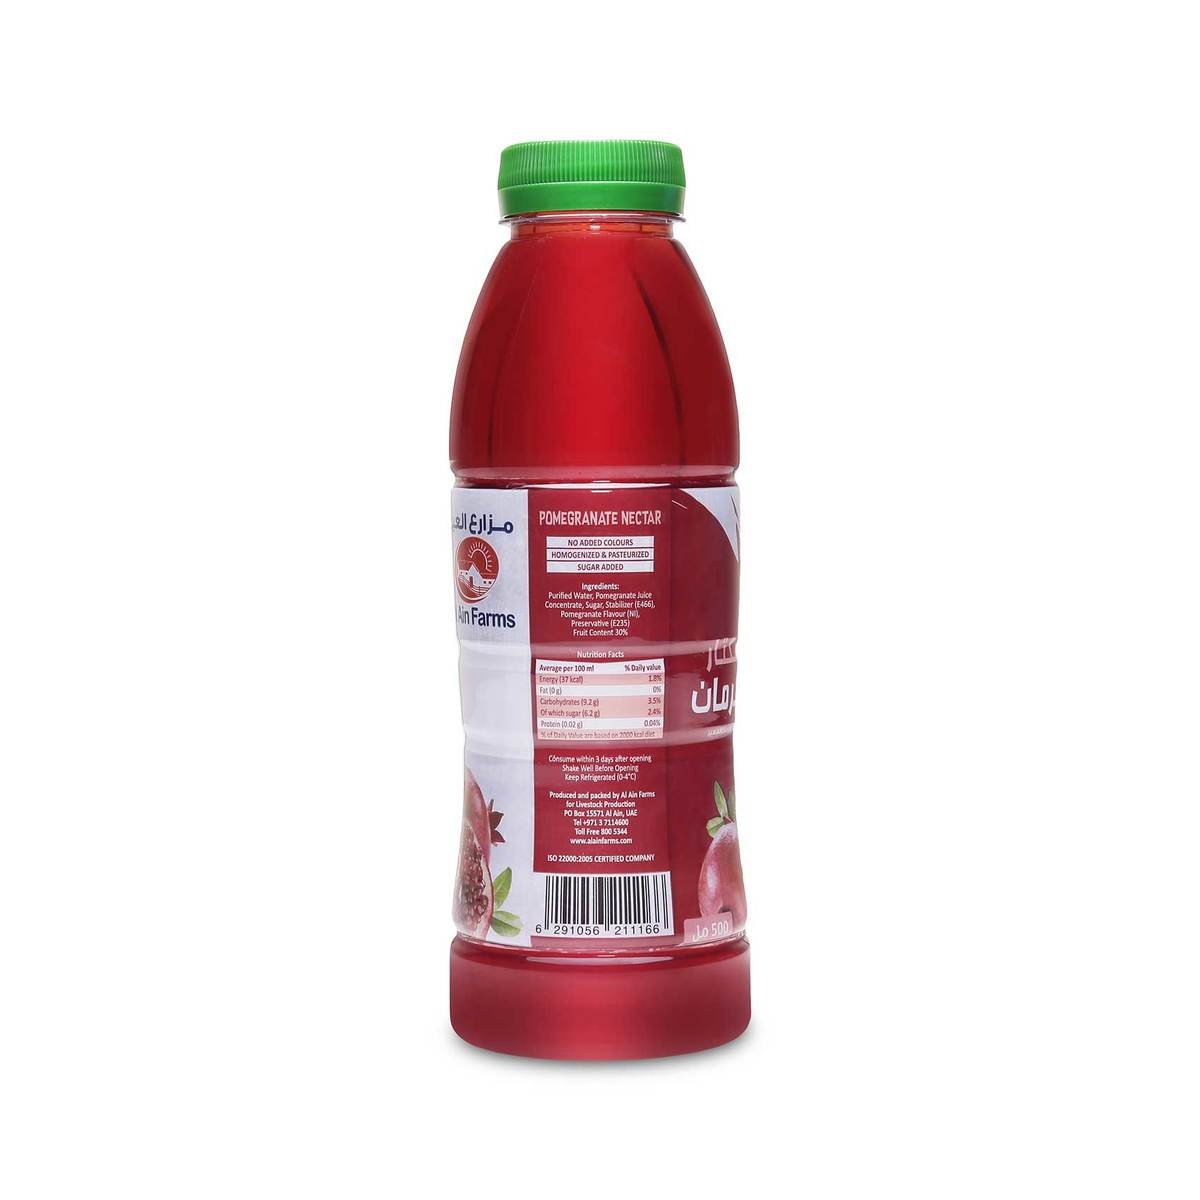 Al Ain Pomegranate Juice 500 ml